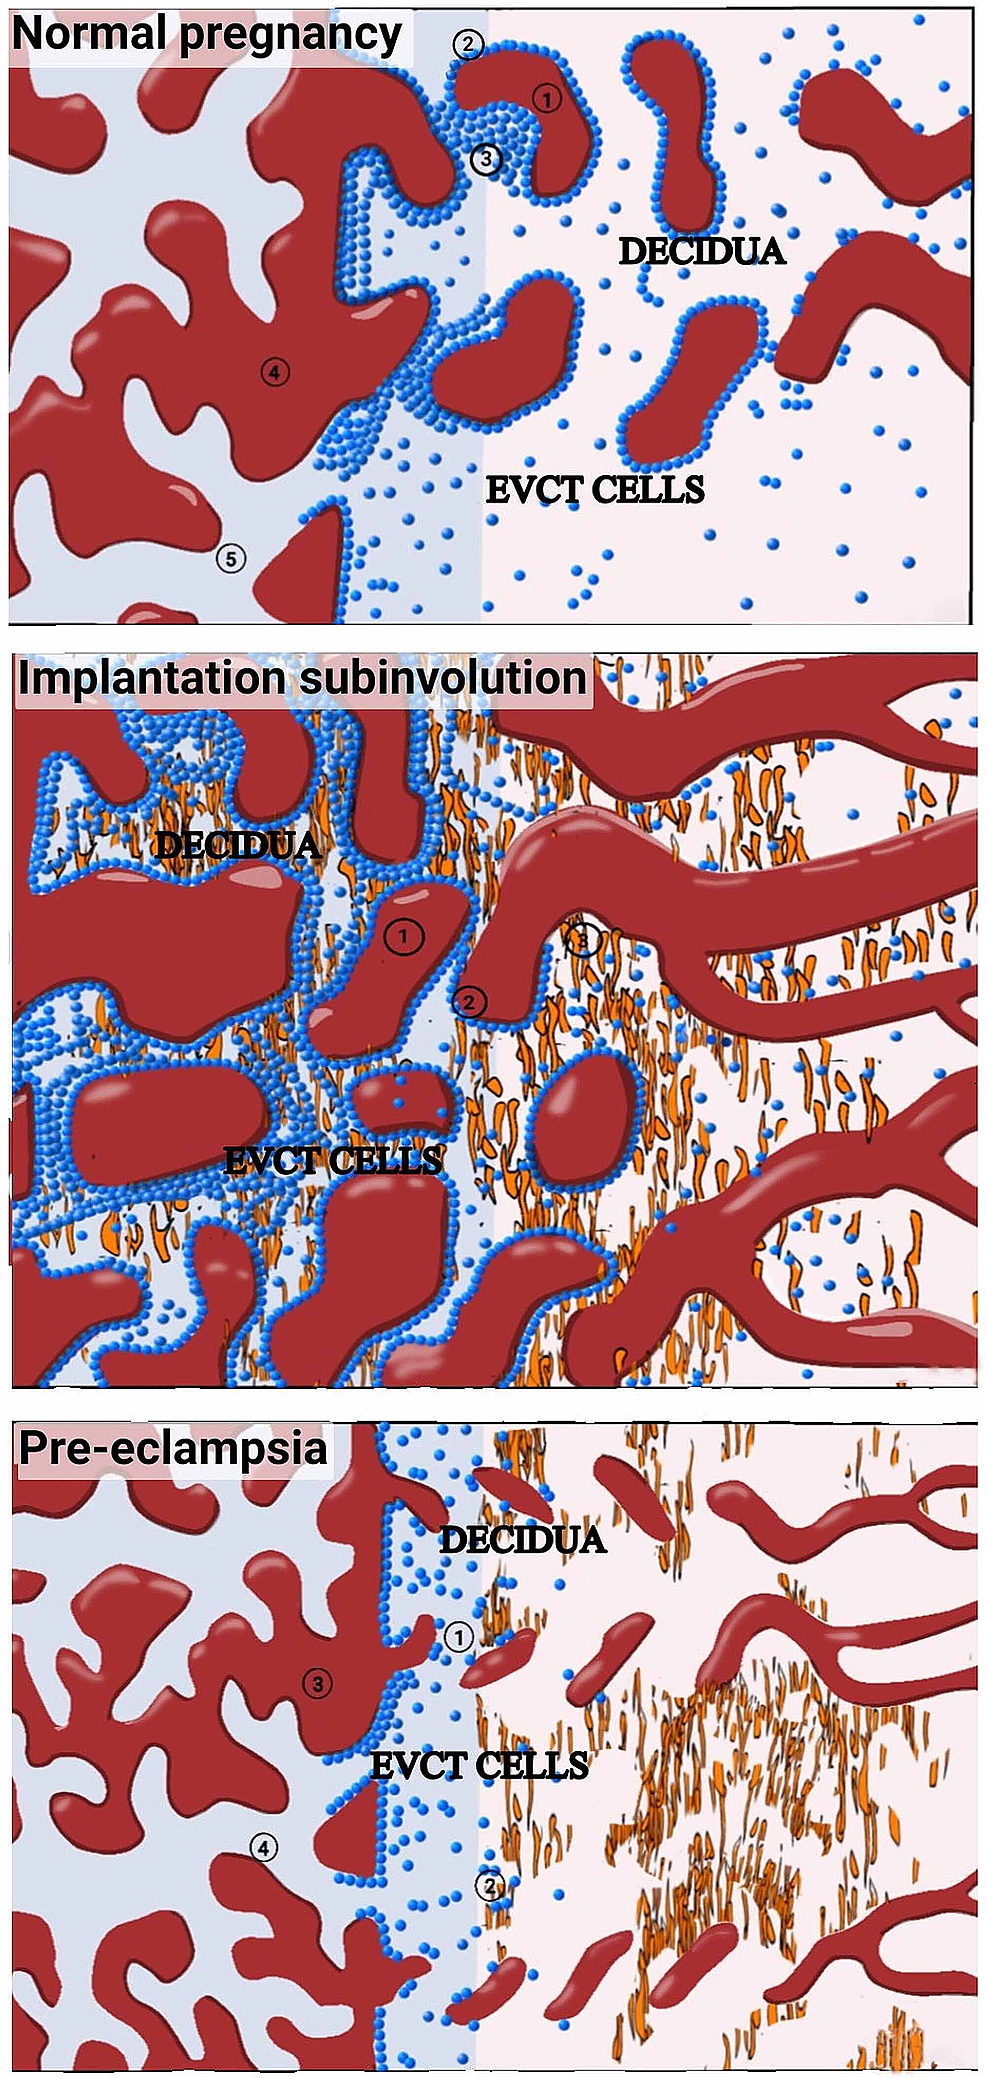 Pattern-of-trophoblastic-invasion-in-normal-pregnancy-(top);-pattern-of-trophoblastic-persistence-in-uterine-subinvolution-(middle);-and-preeclampsia-(bottom)